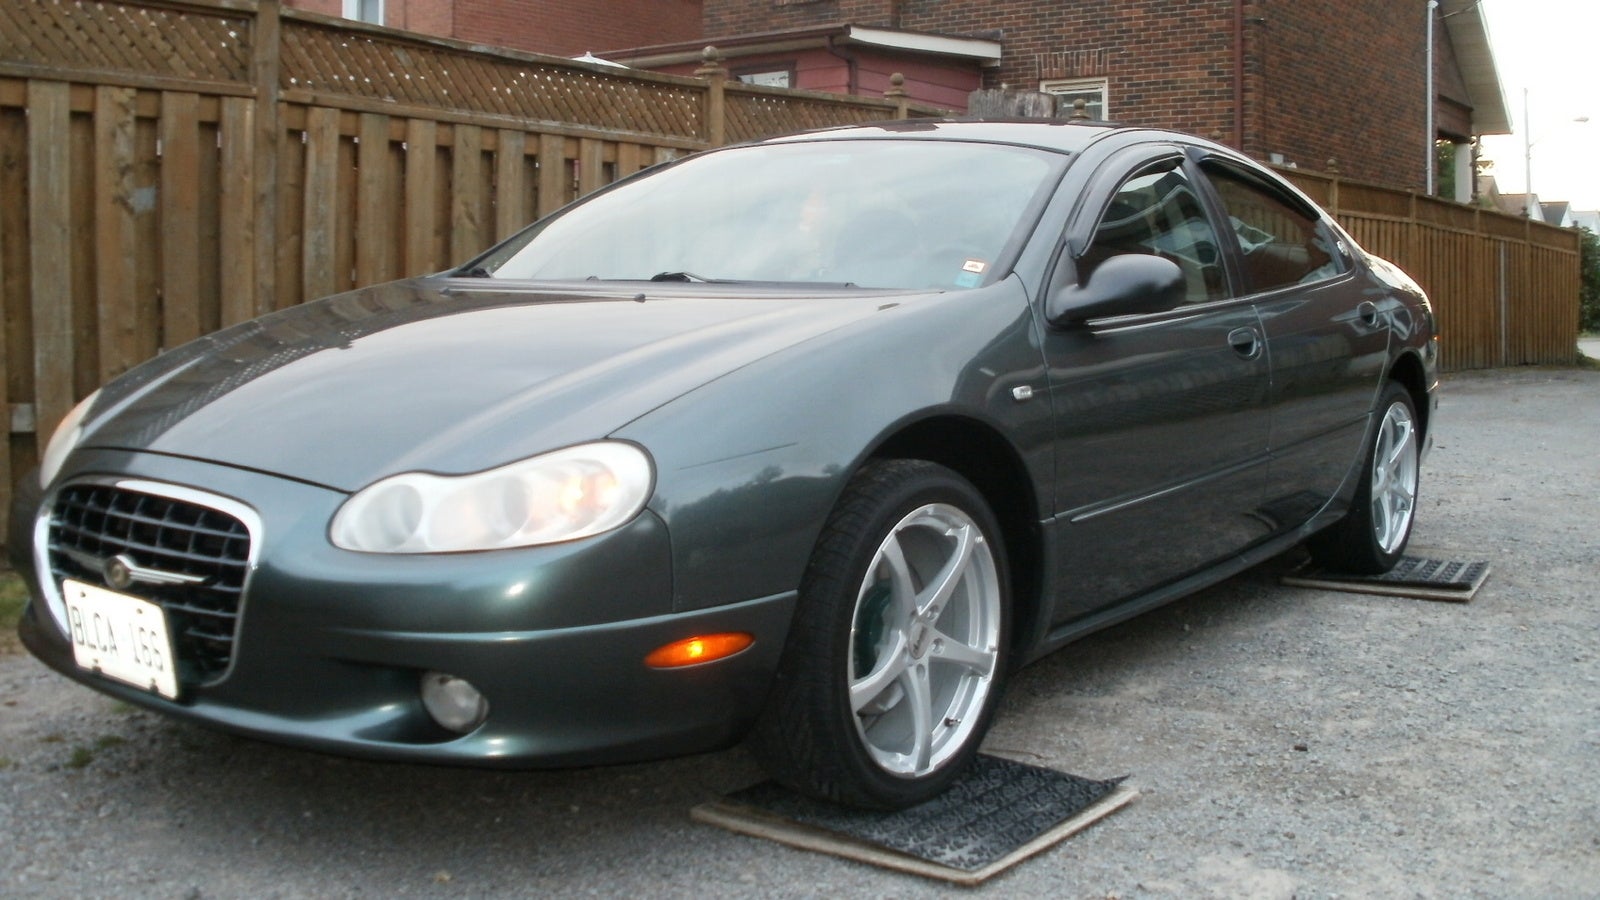 Chrysler concorde 2002 problems